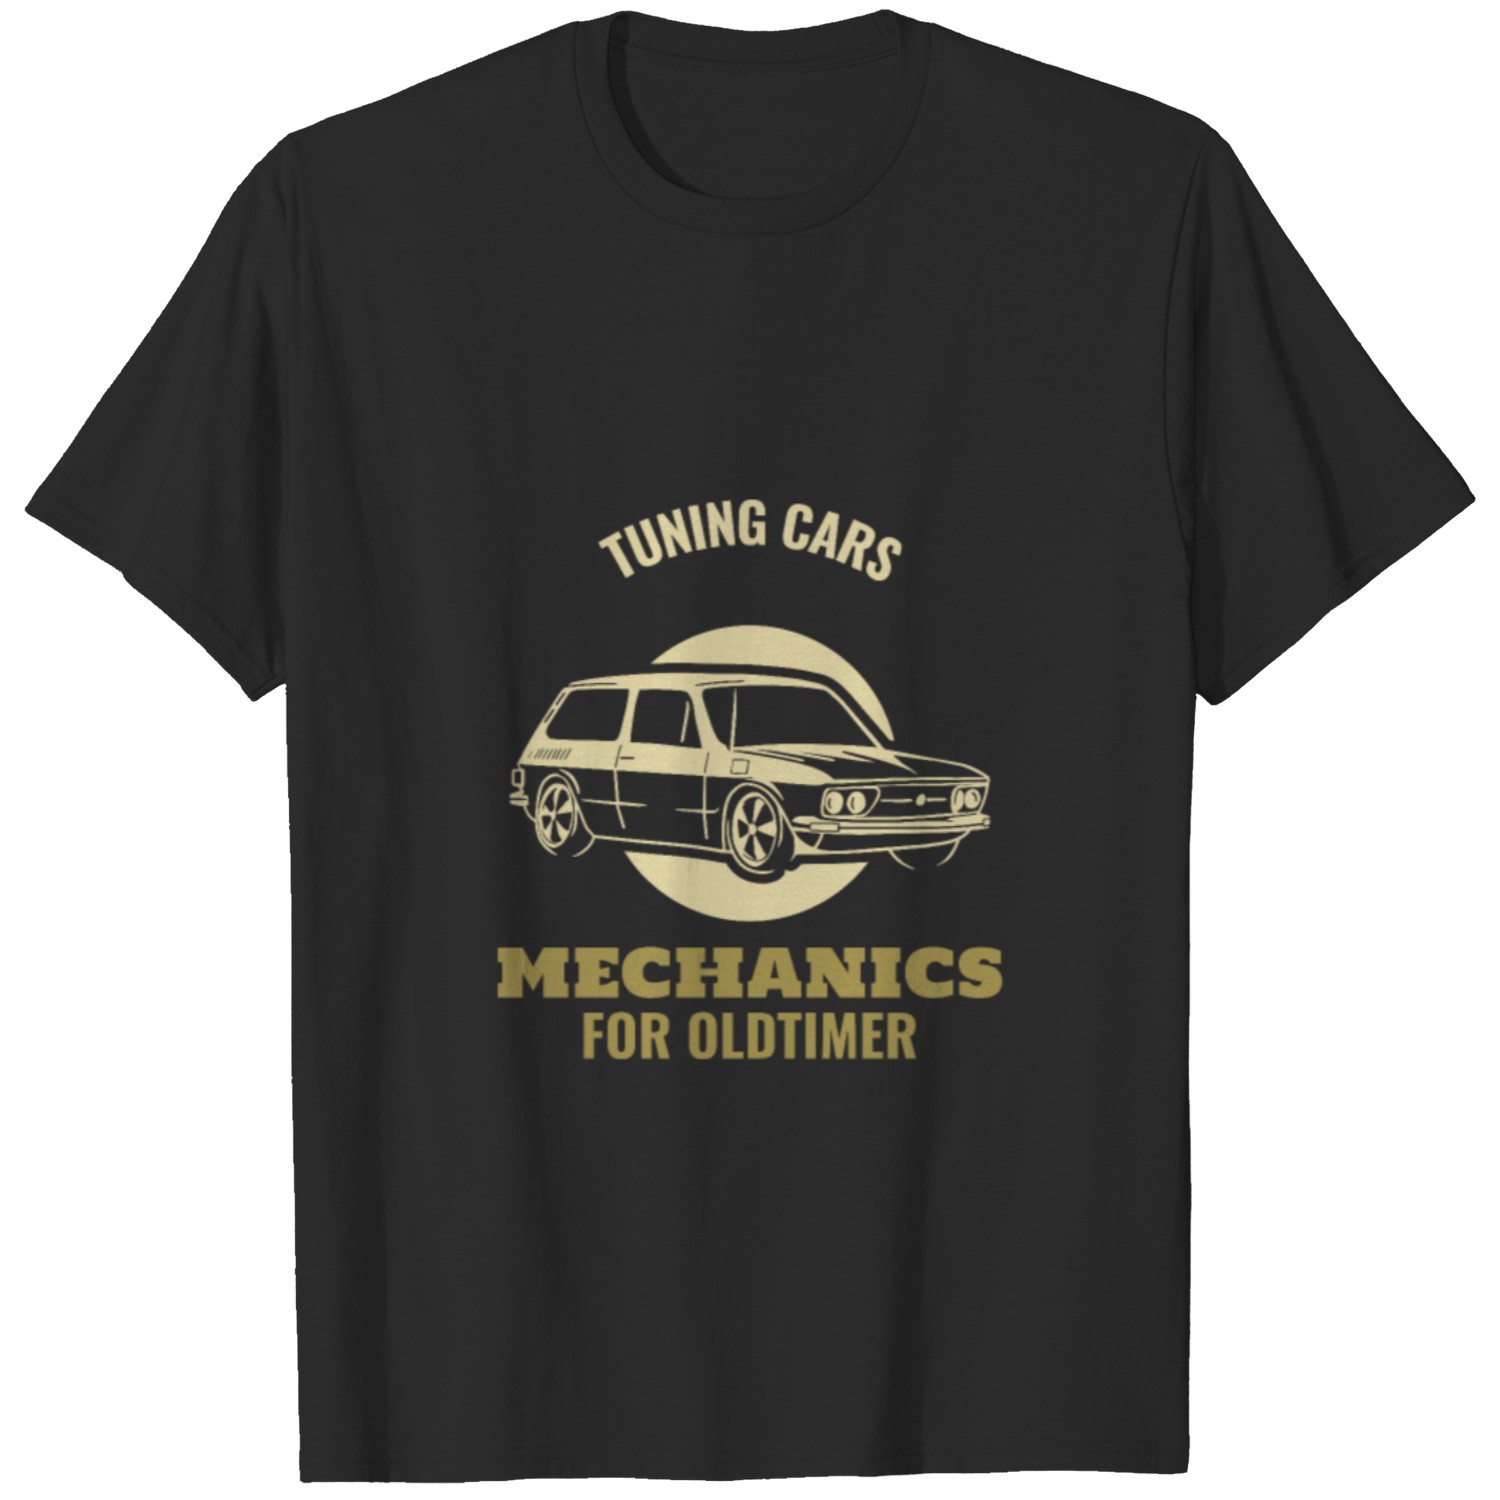 Tuning Cars - Mechanics for Oldtimer T-shirt